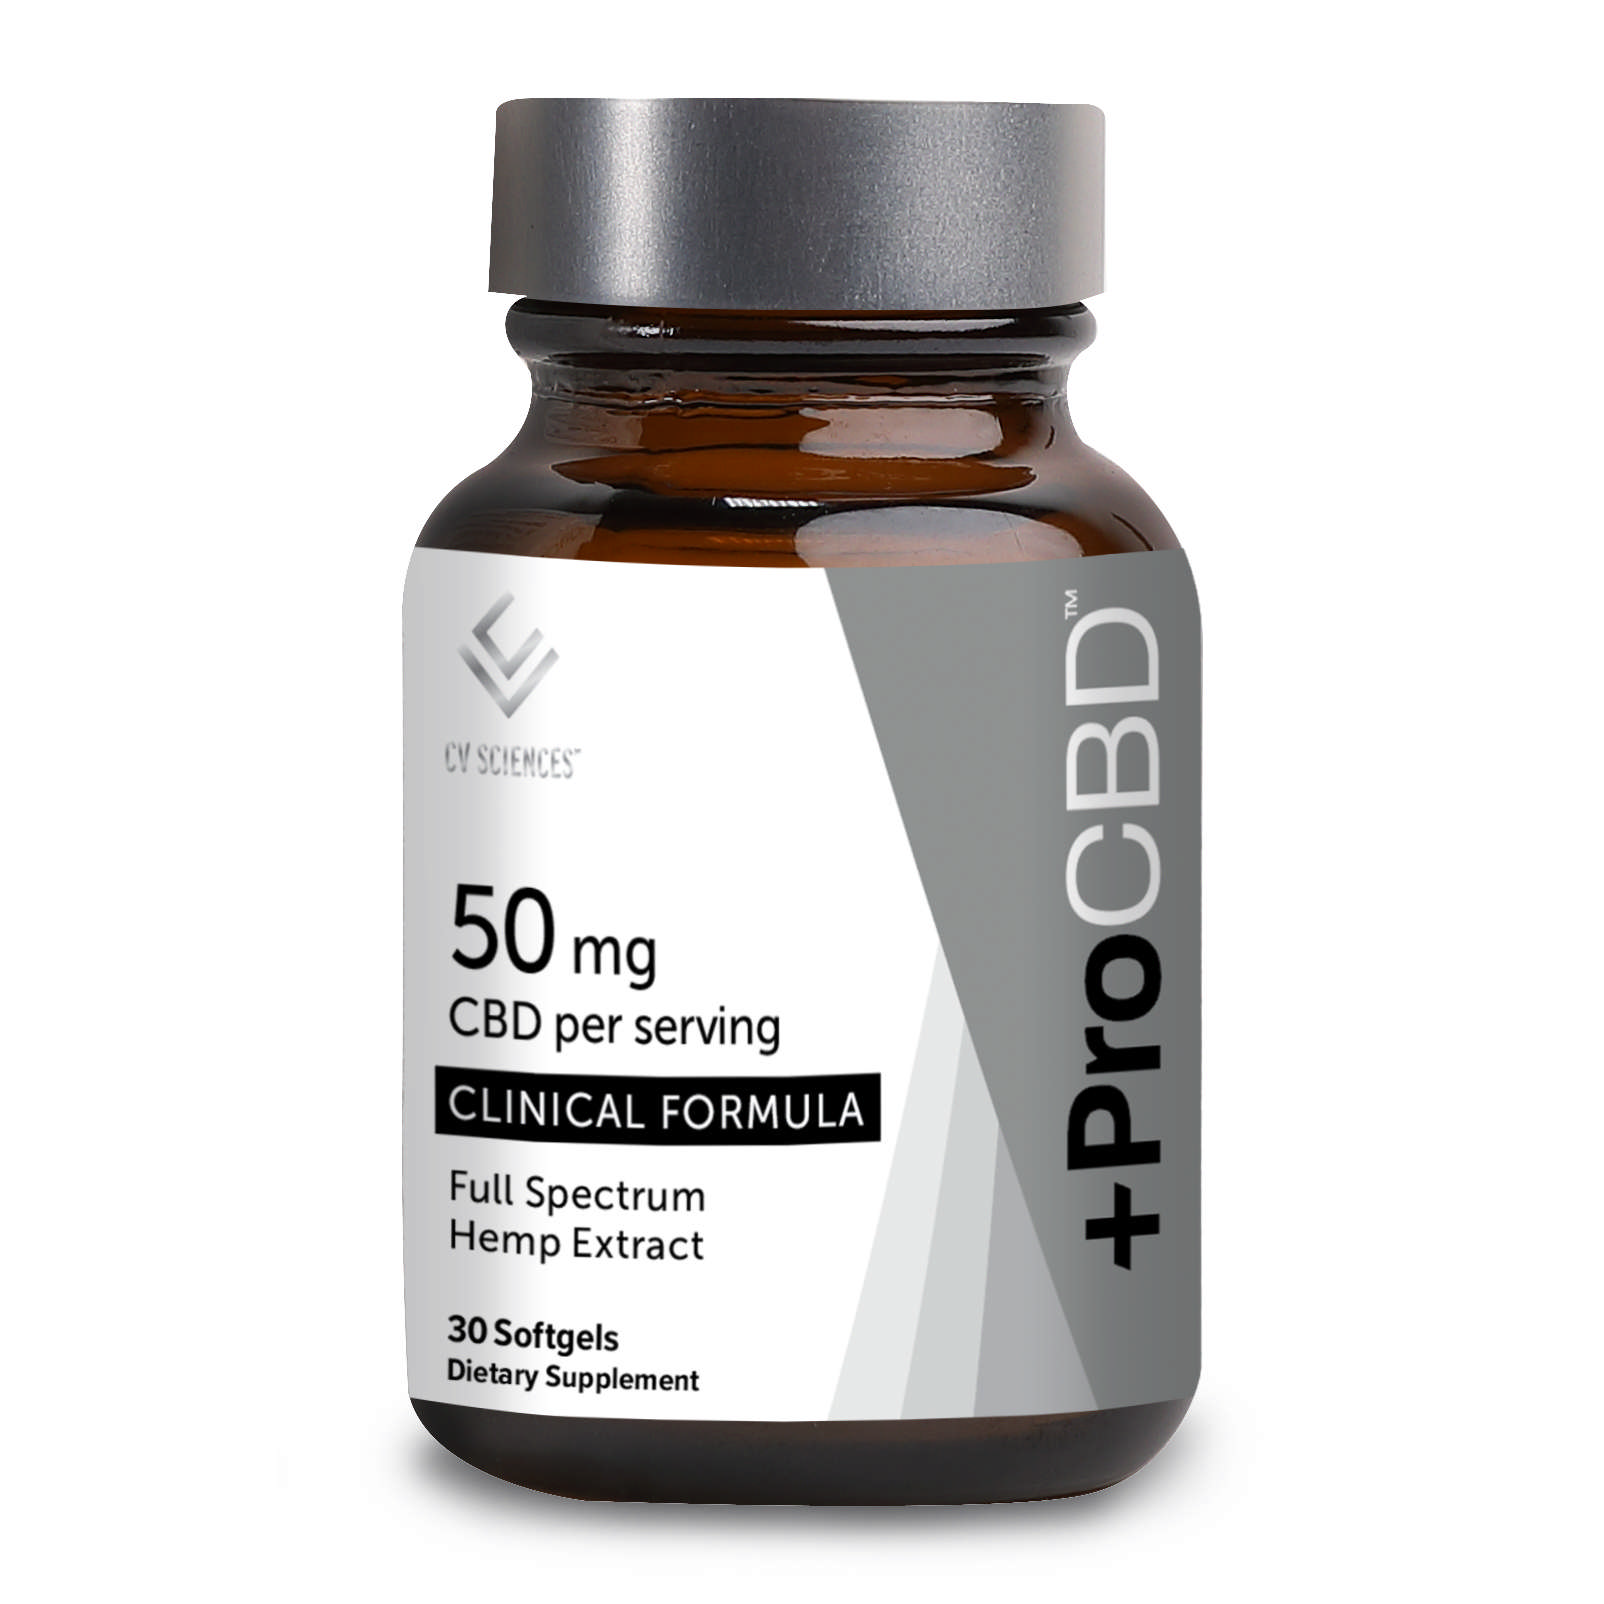 Cv Sciences - Cbd Oil Plus Pro 50 mg softgel